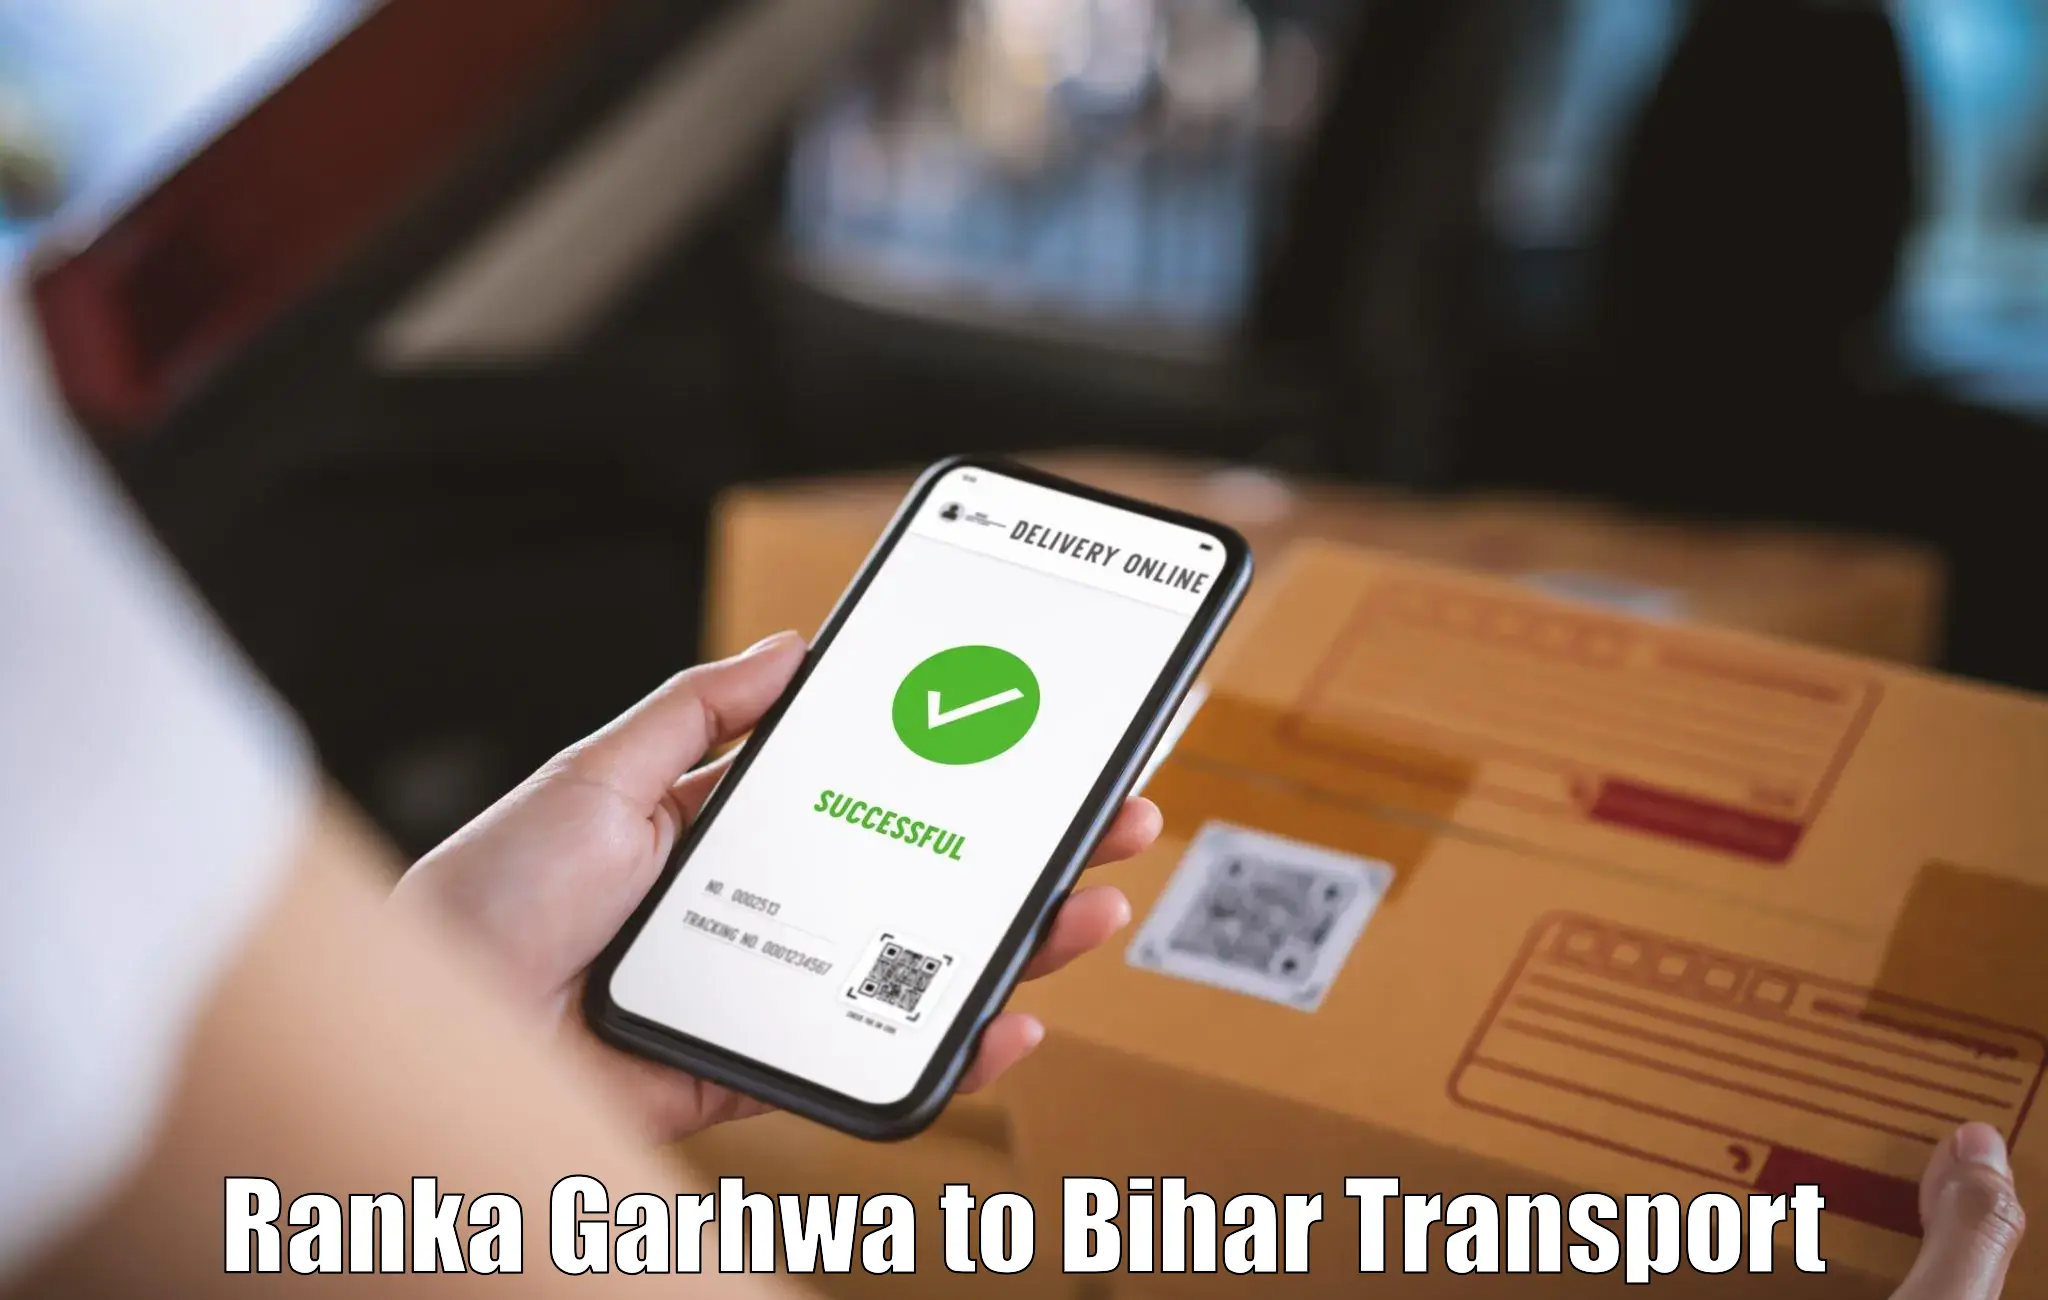 Package delivery services Ranka Garhwa to Barhiya